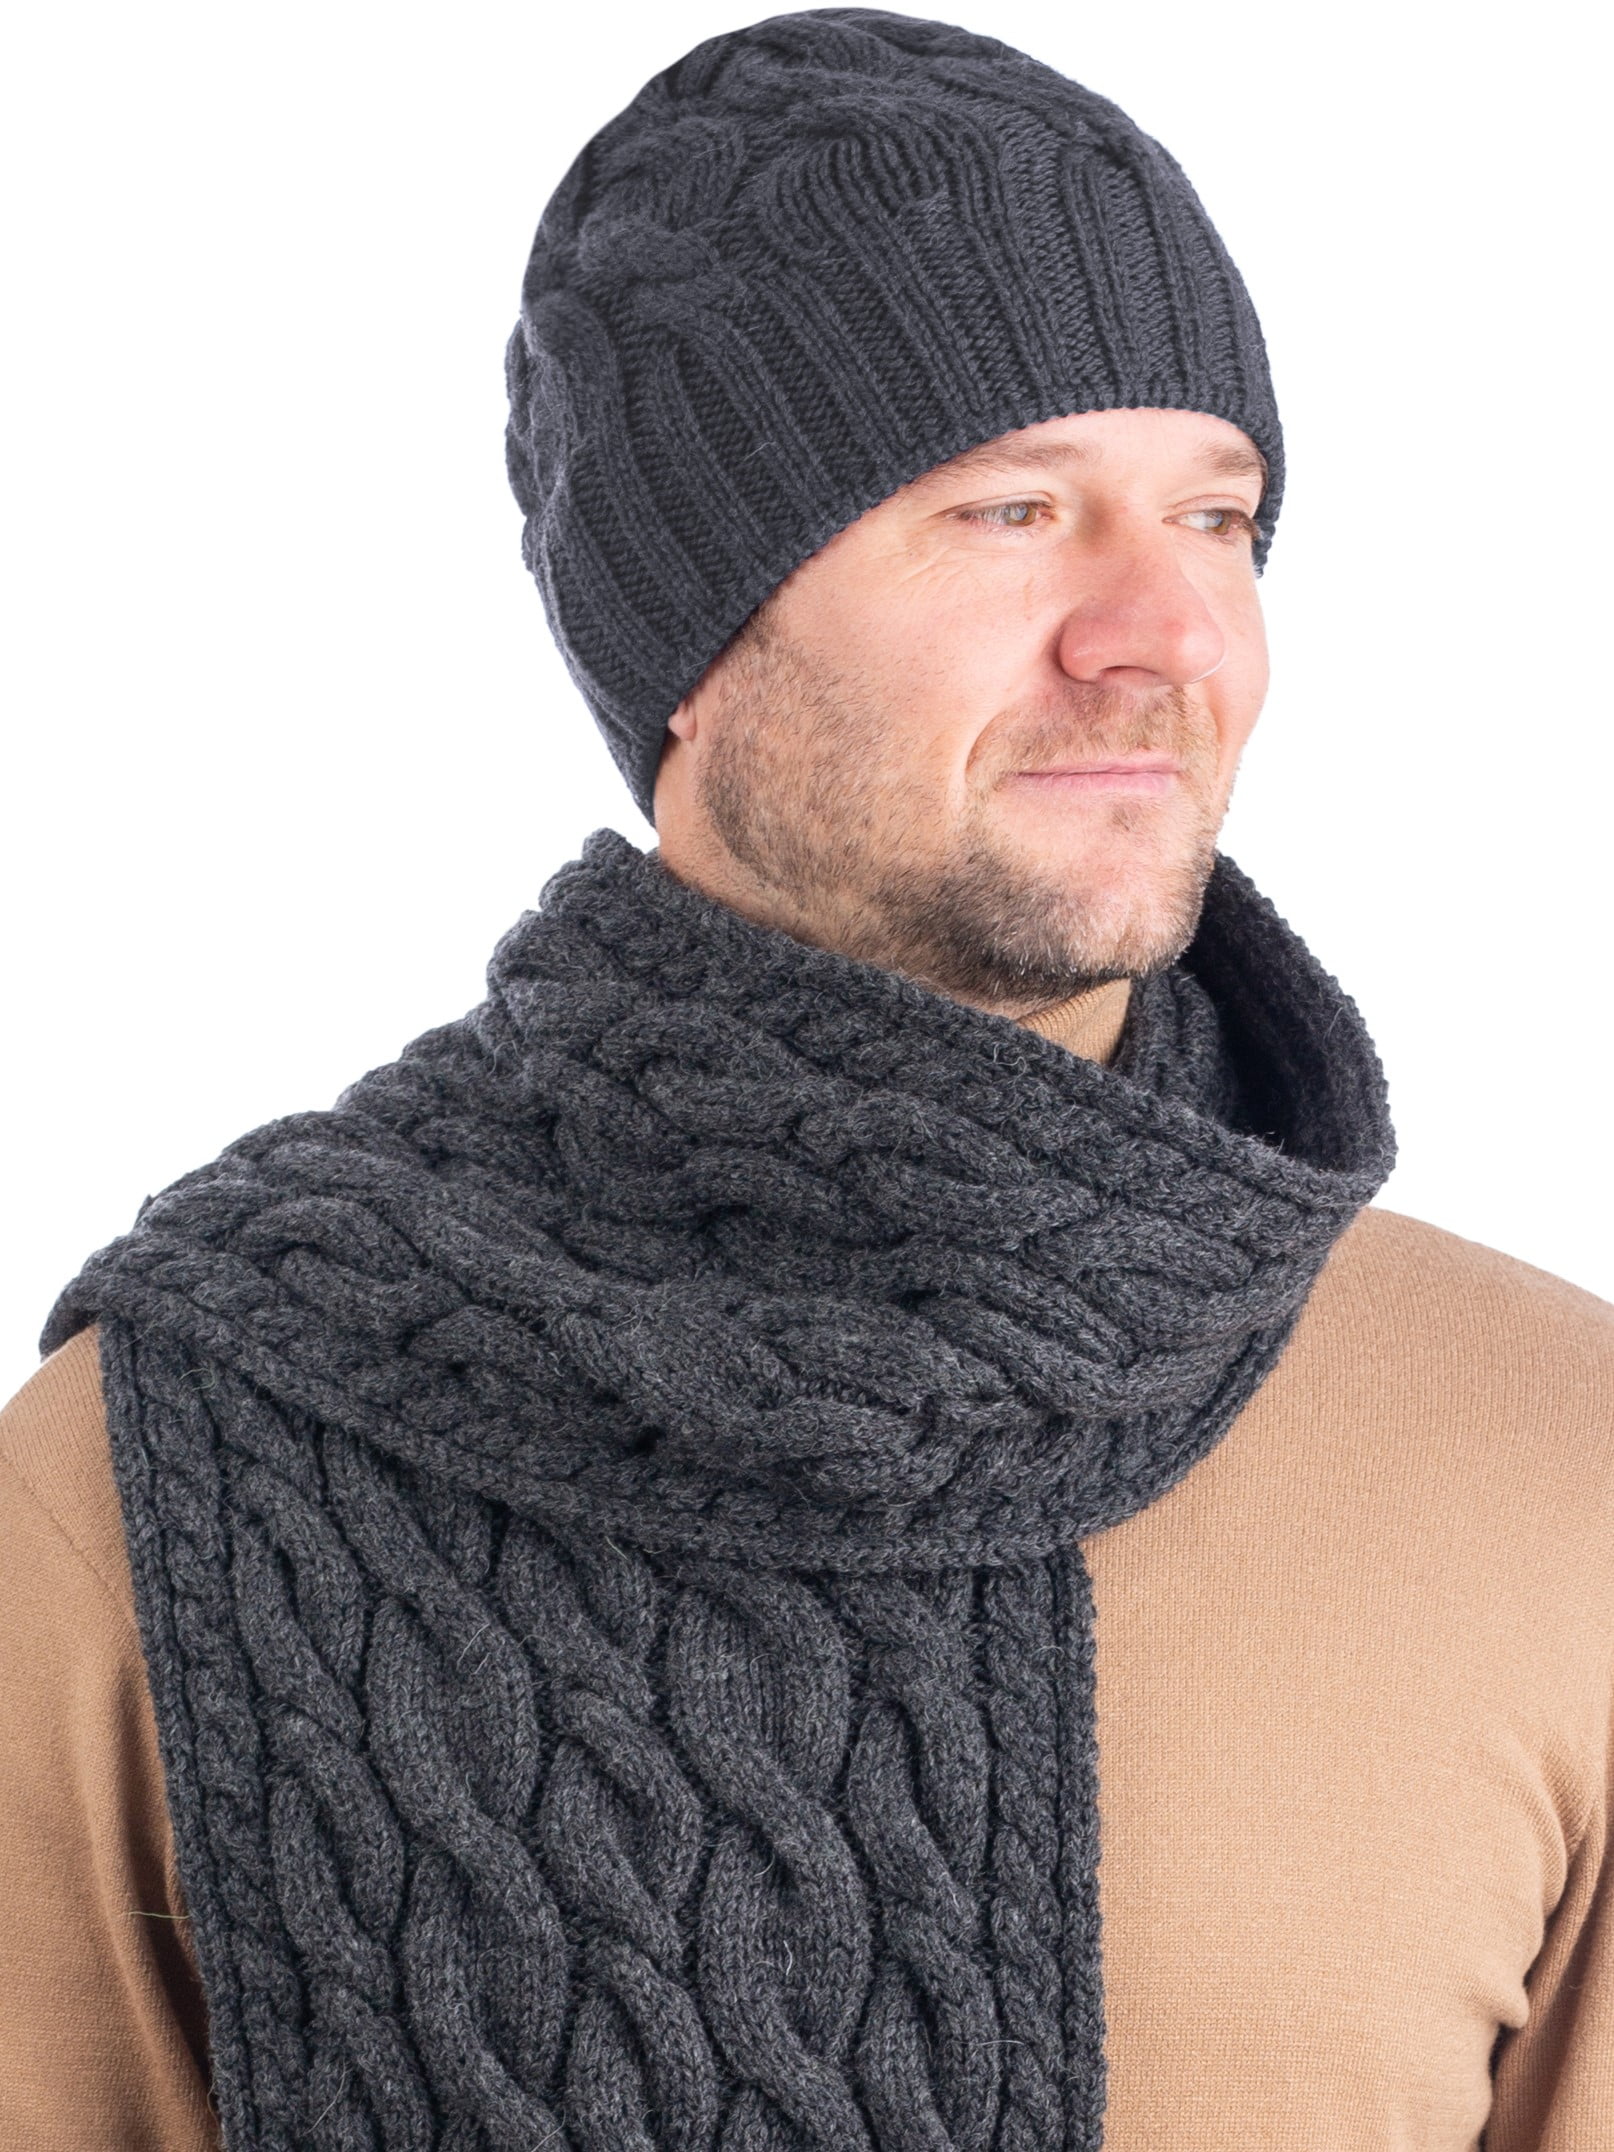 Scarf 100% MERINO WOOL adult unisex men women knitted warm 